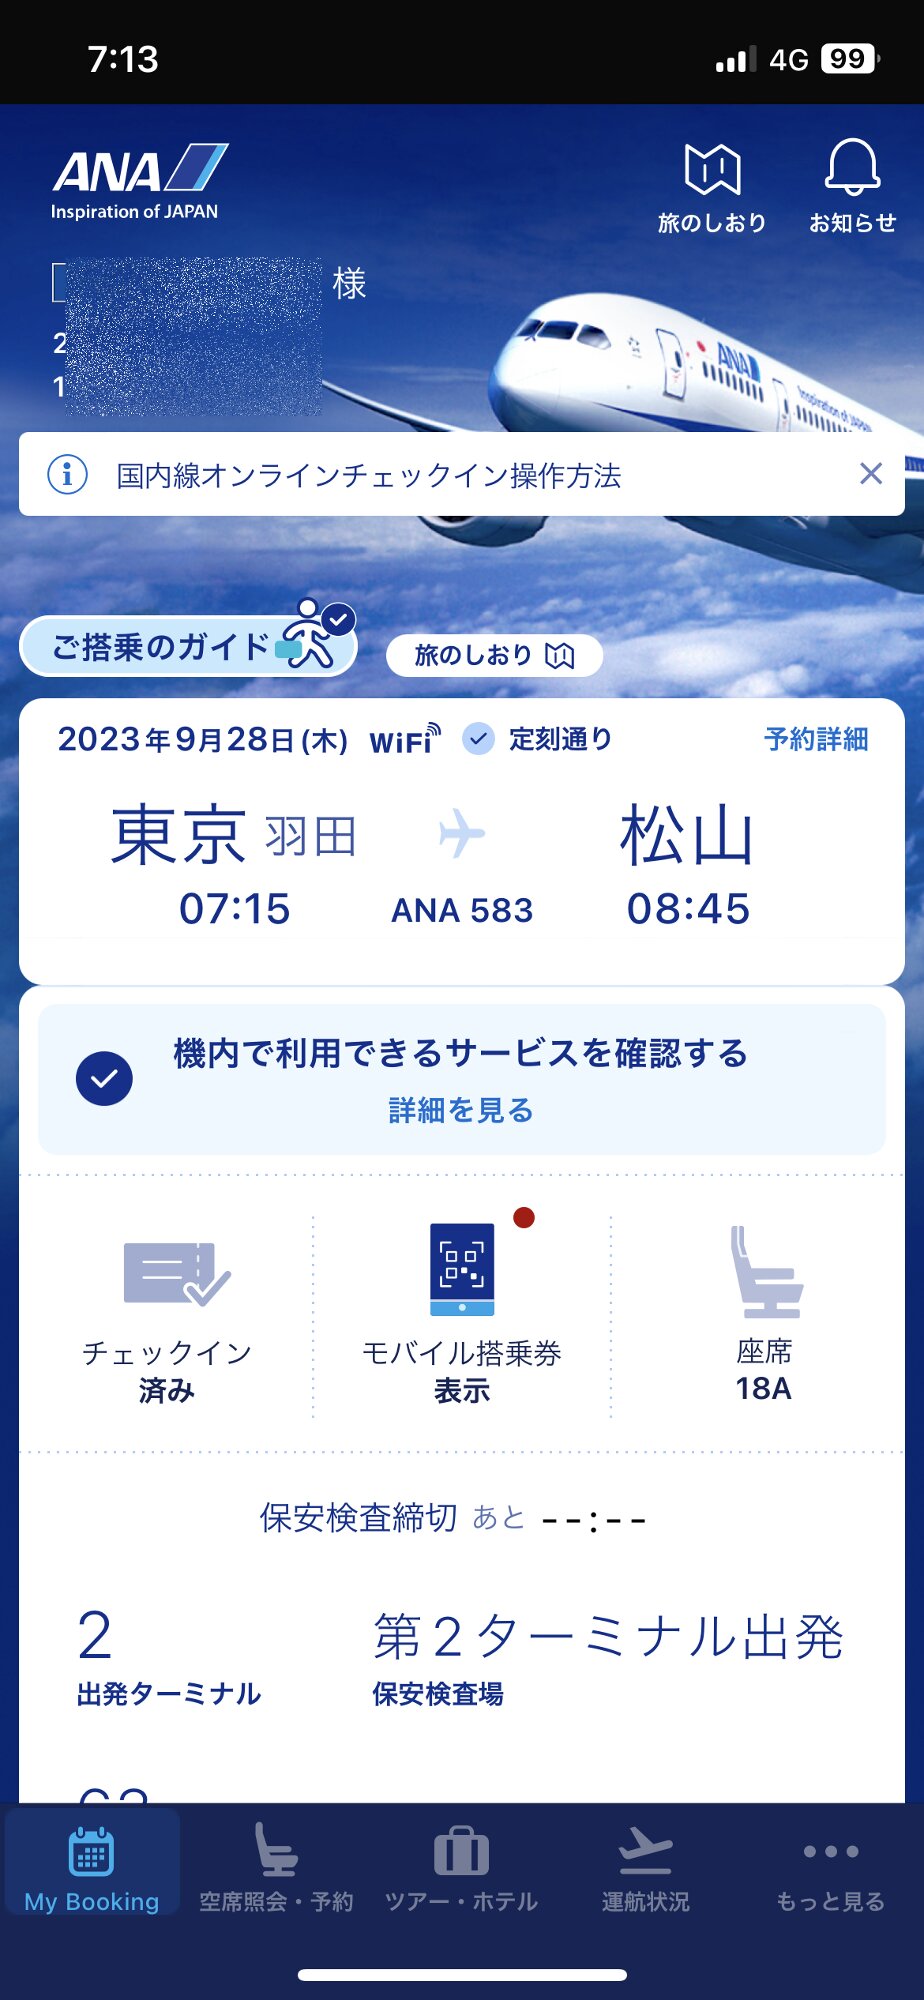 ANAアプリの画面。搭乗便が表示されている